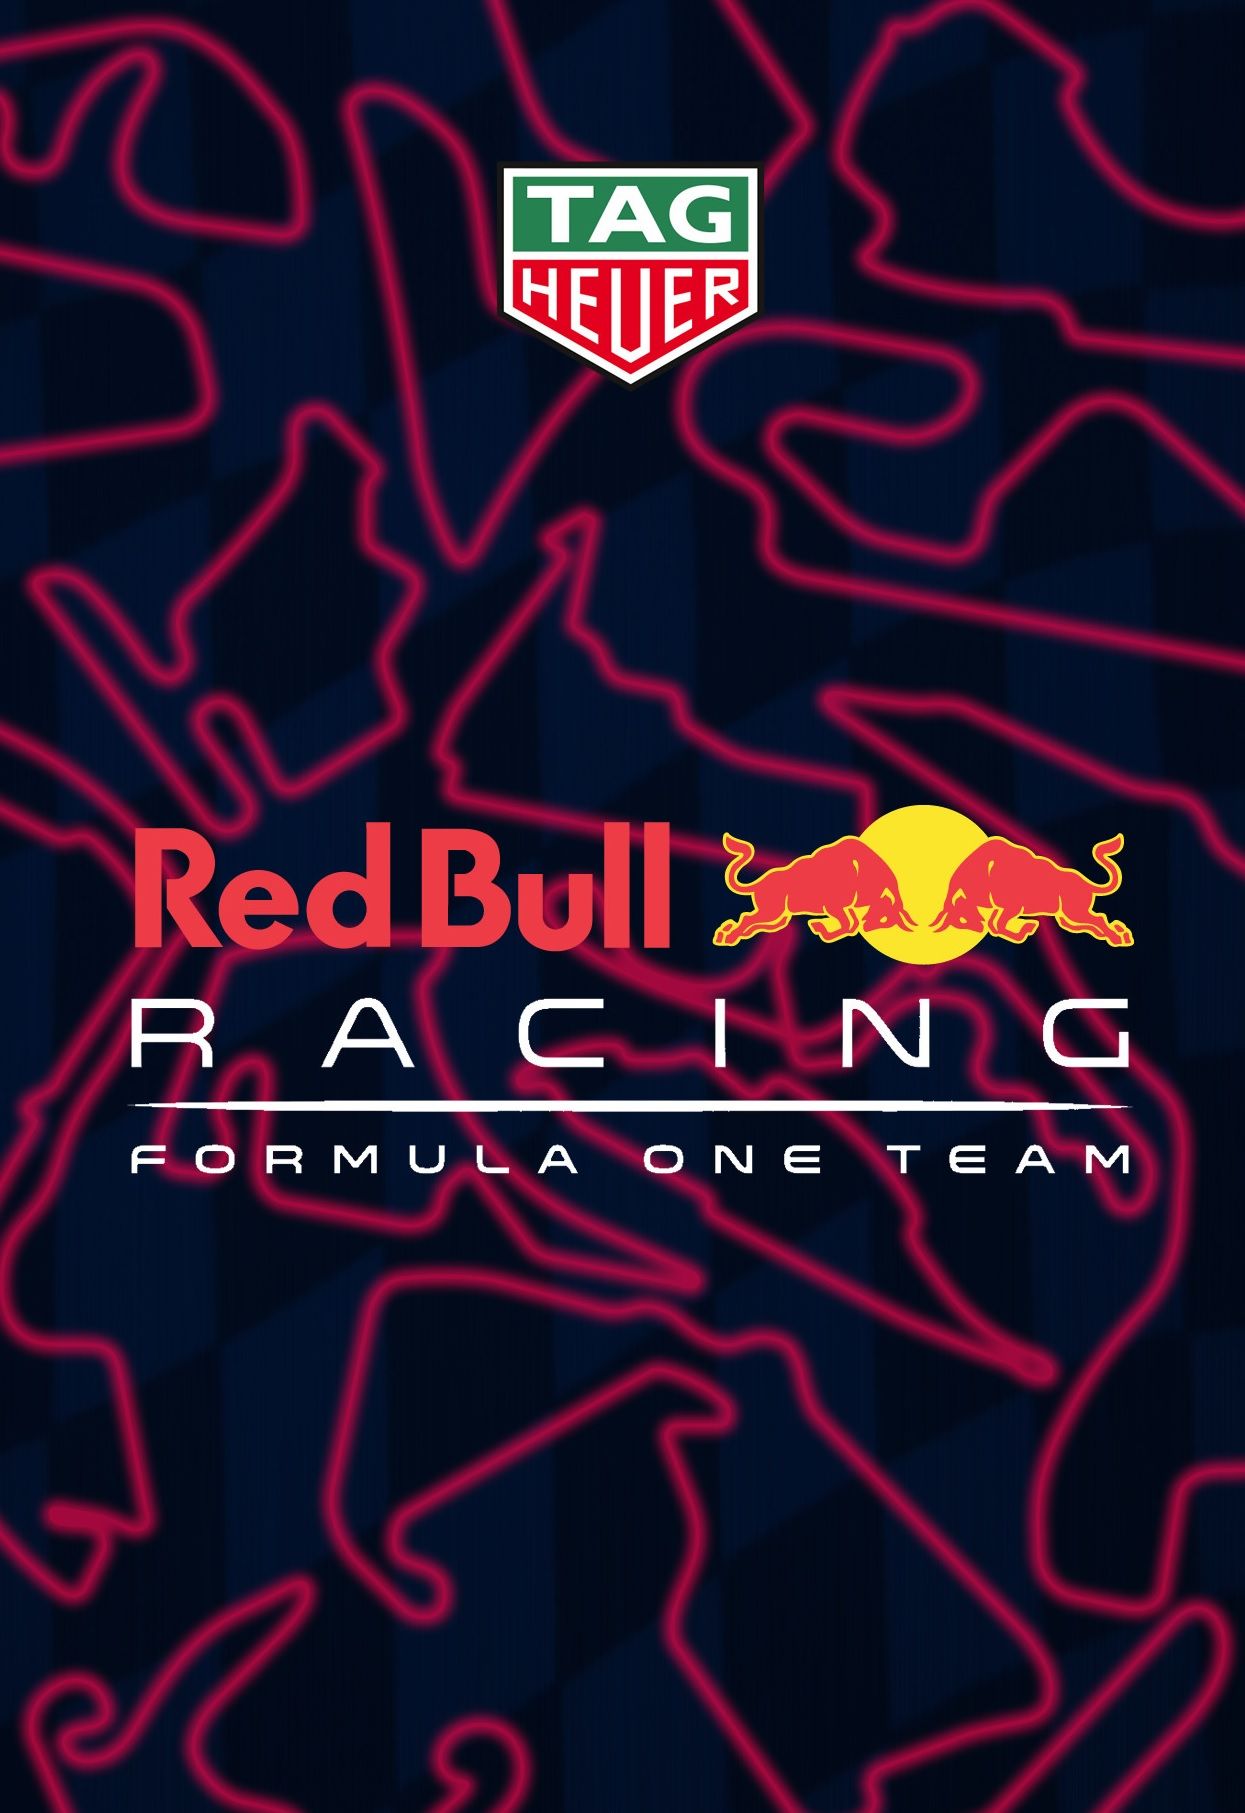 Red bull racing peticiãn de red bull fondos de pantalla de coches cosas de coche